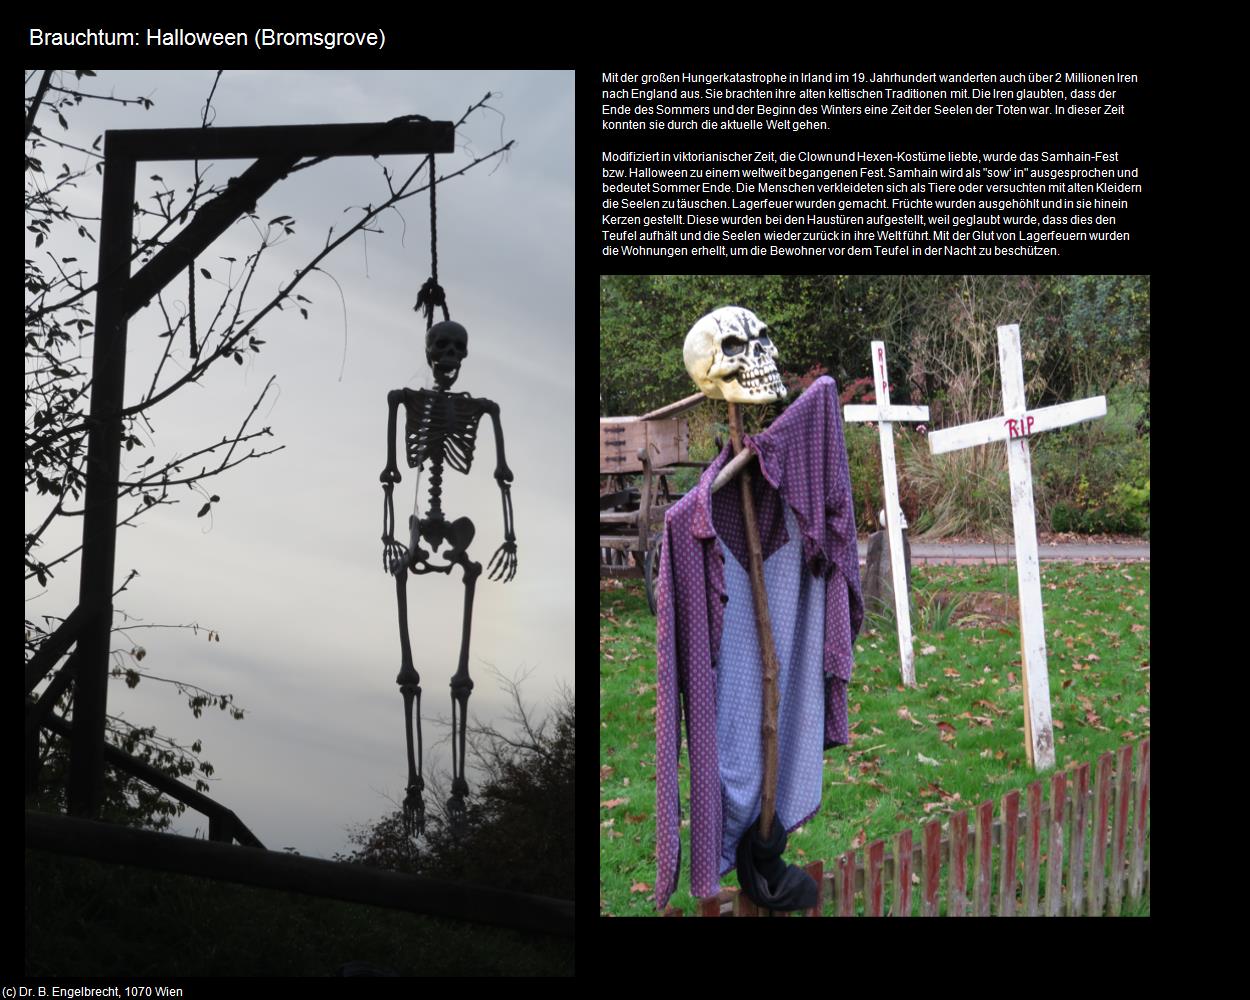 Brauchtum: Halloween (Bromsgrove, England) in Kulturatlas-ENGLAND und WALES